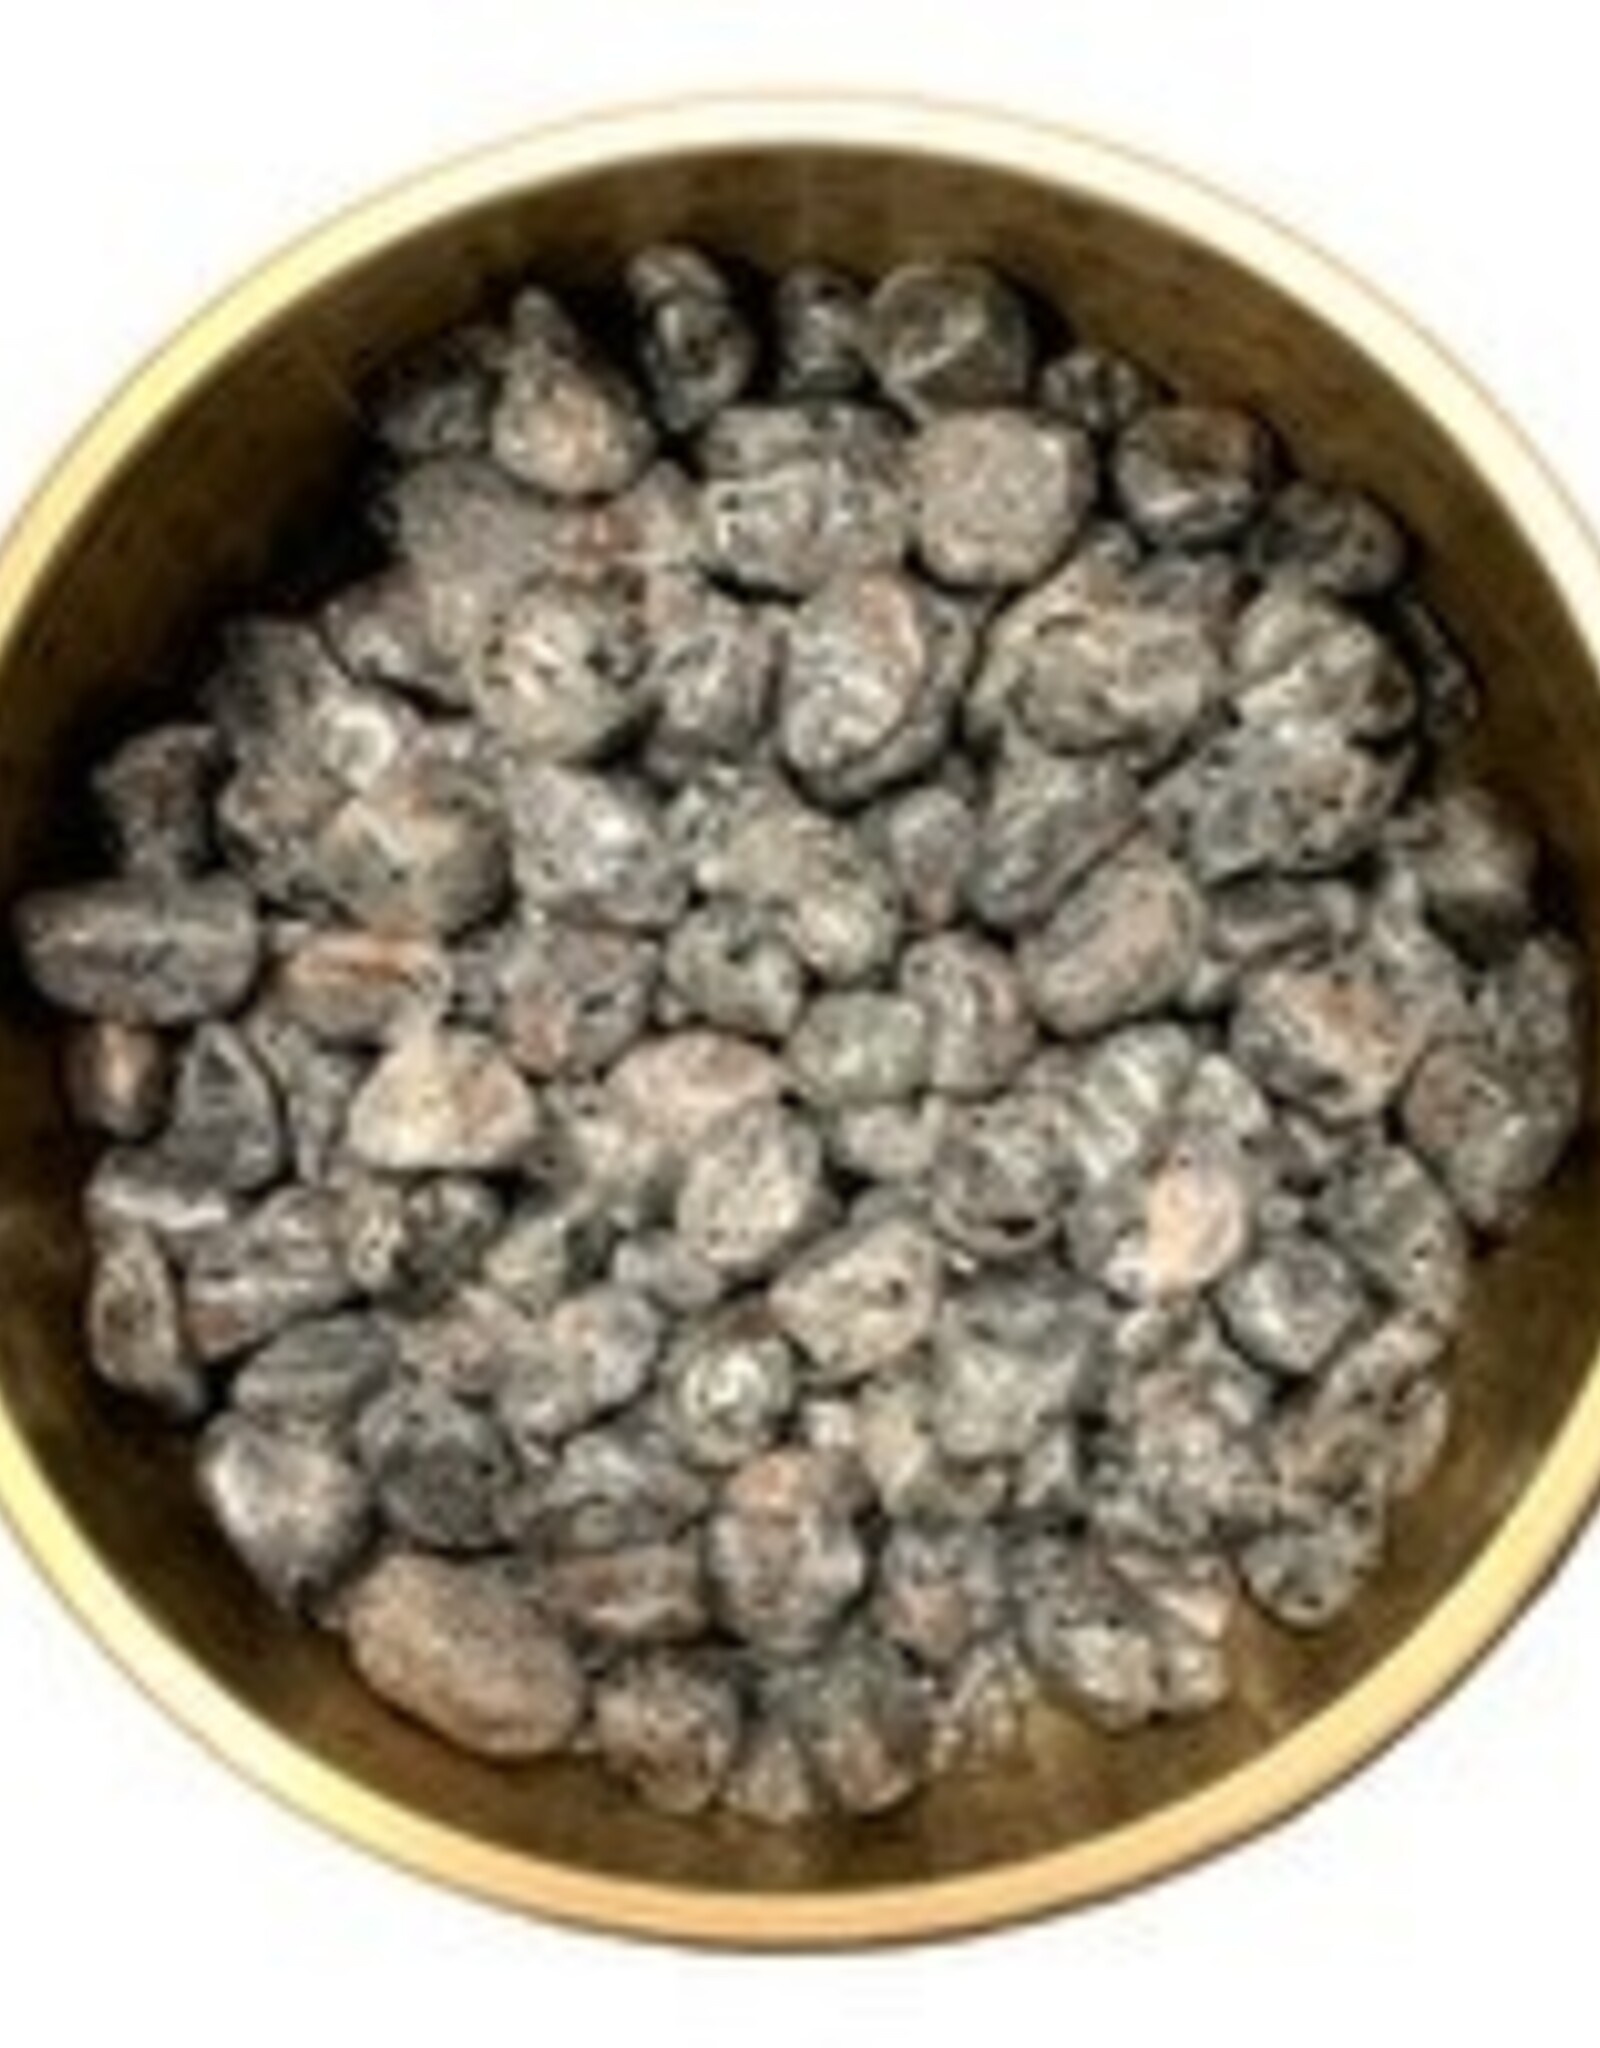 Yooperlite Tumbled Stones - 10 to 20mm Small